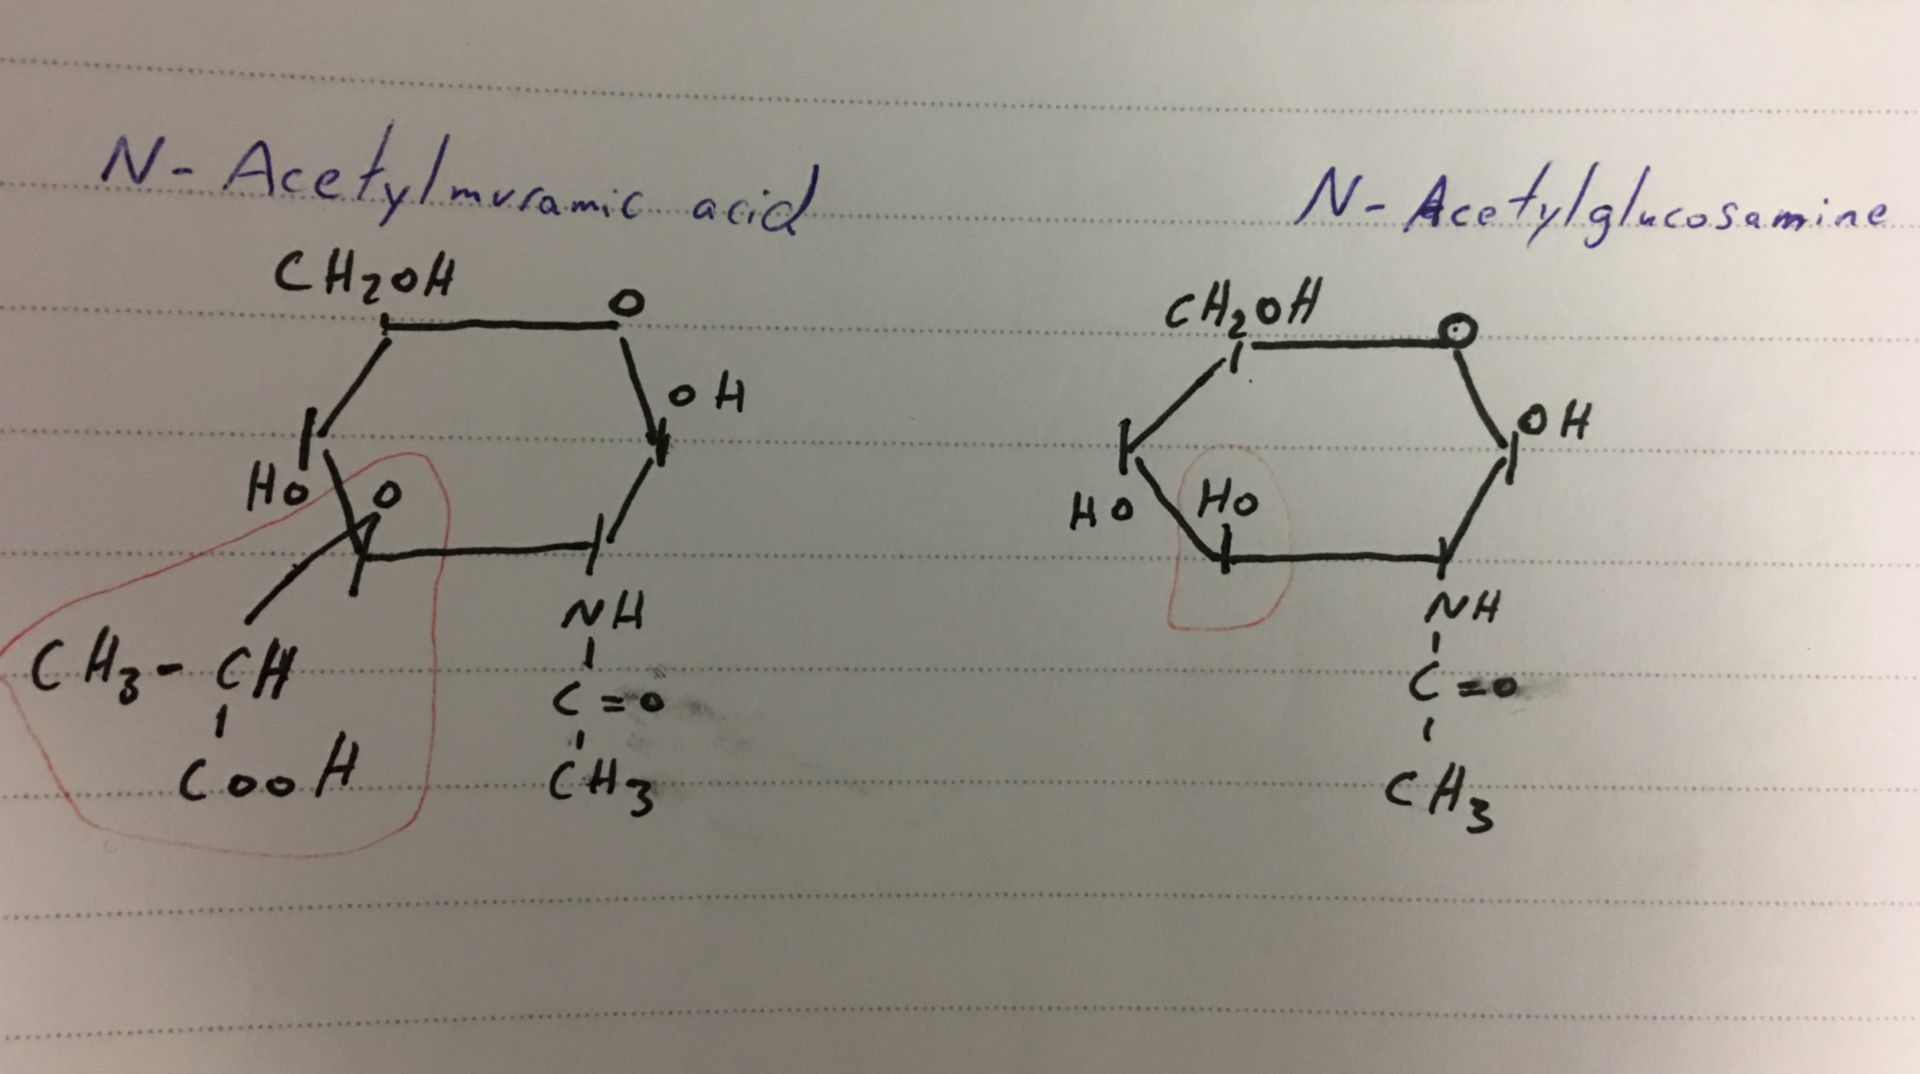 N-Acetylglucosamid